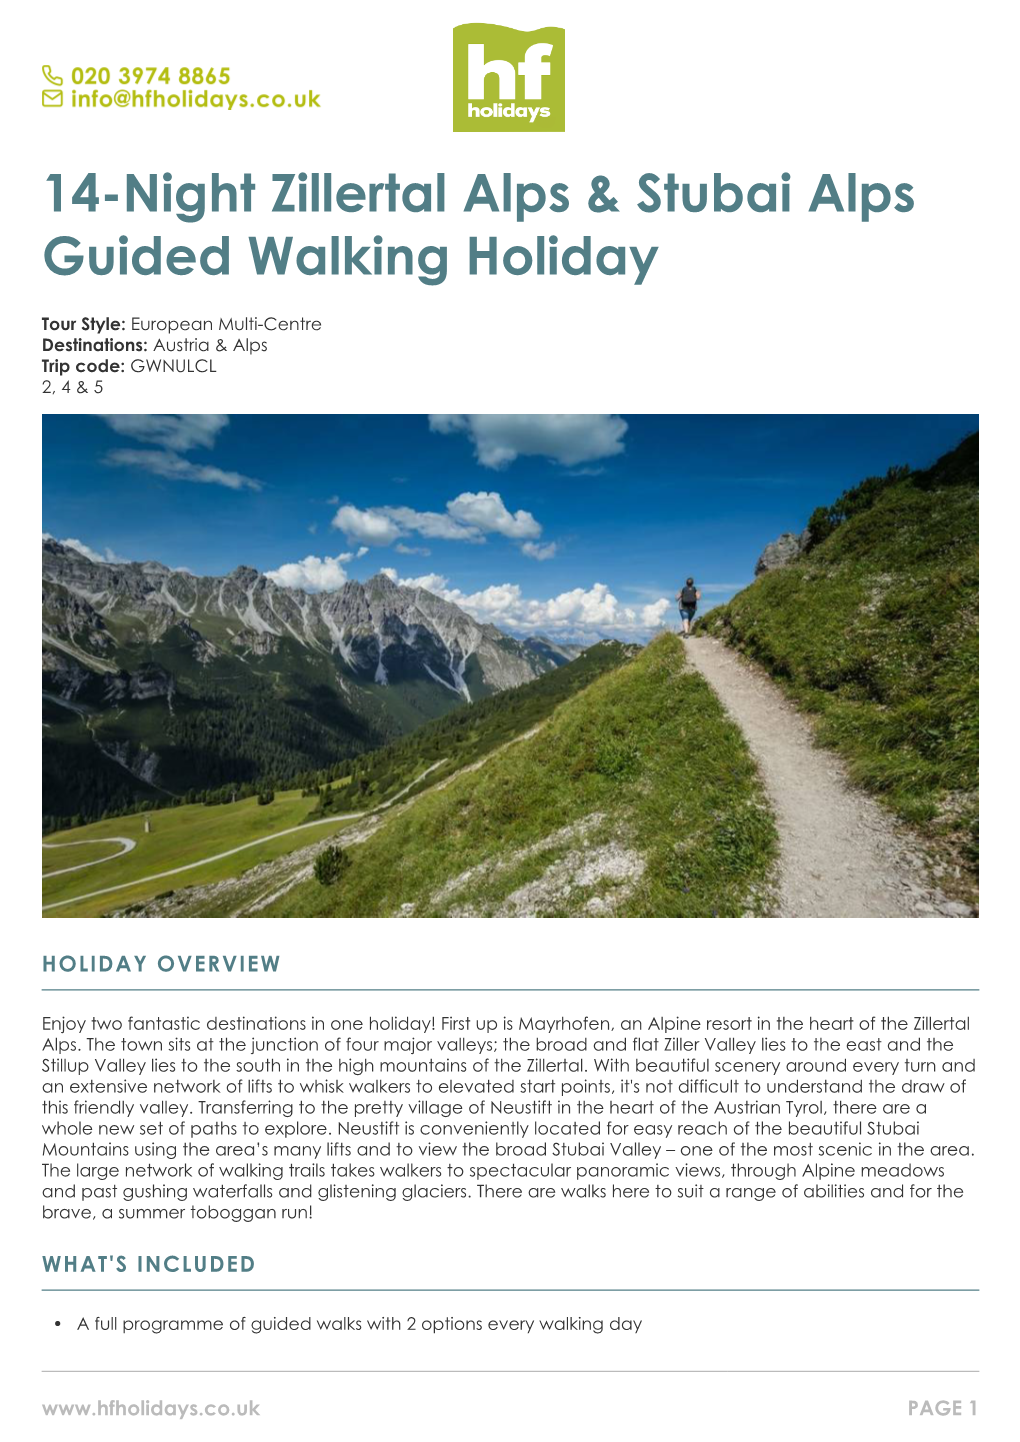 14-Night Zillertal Alps & Stubai Alps Guided Walking Holiday